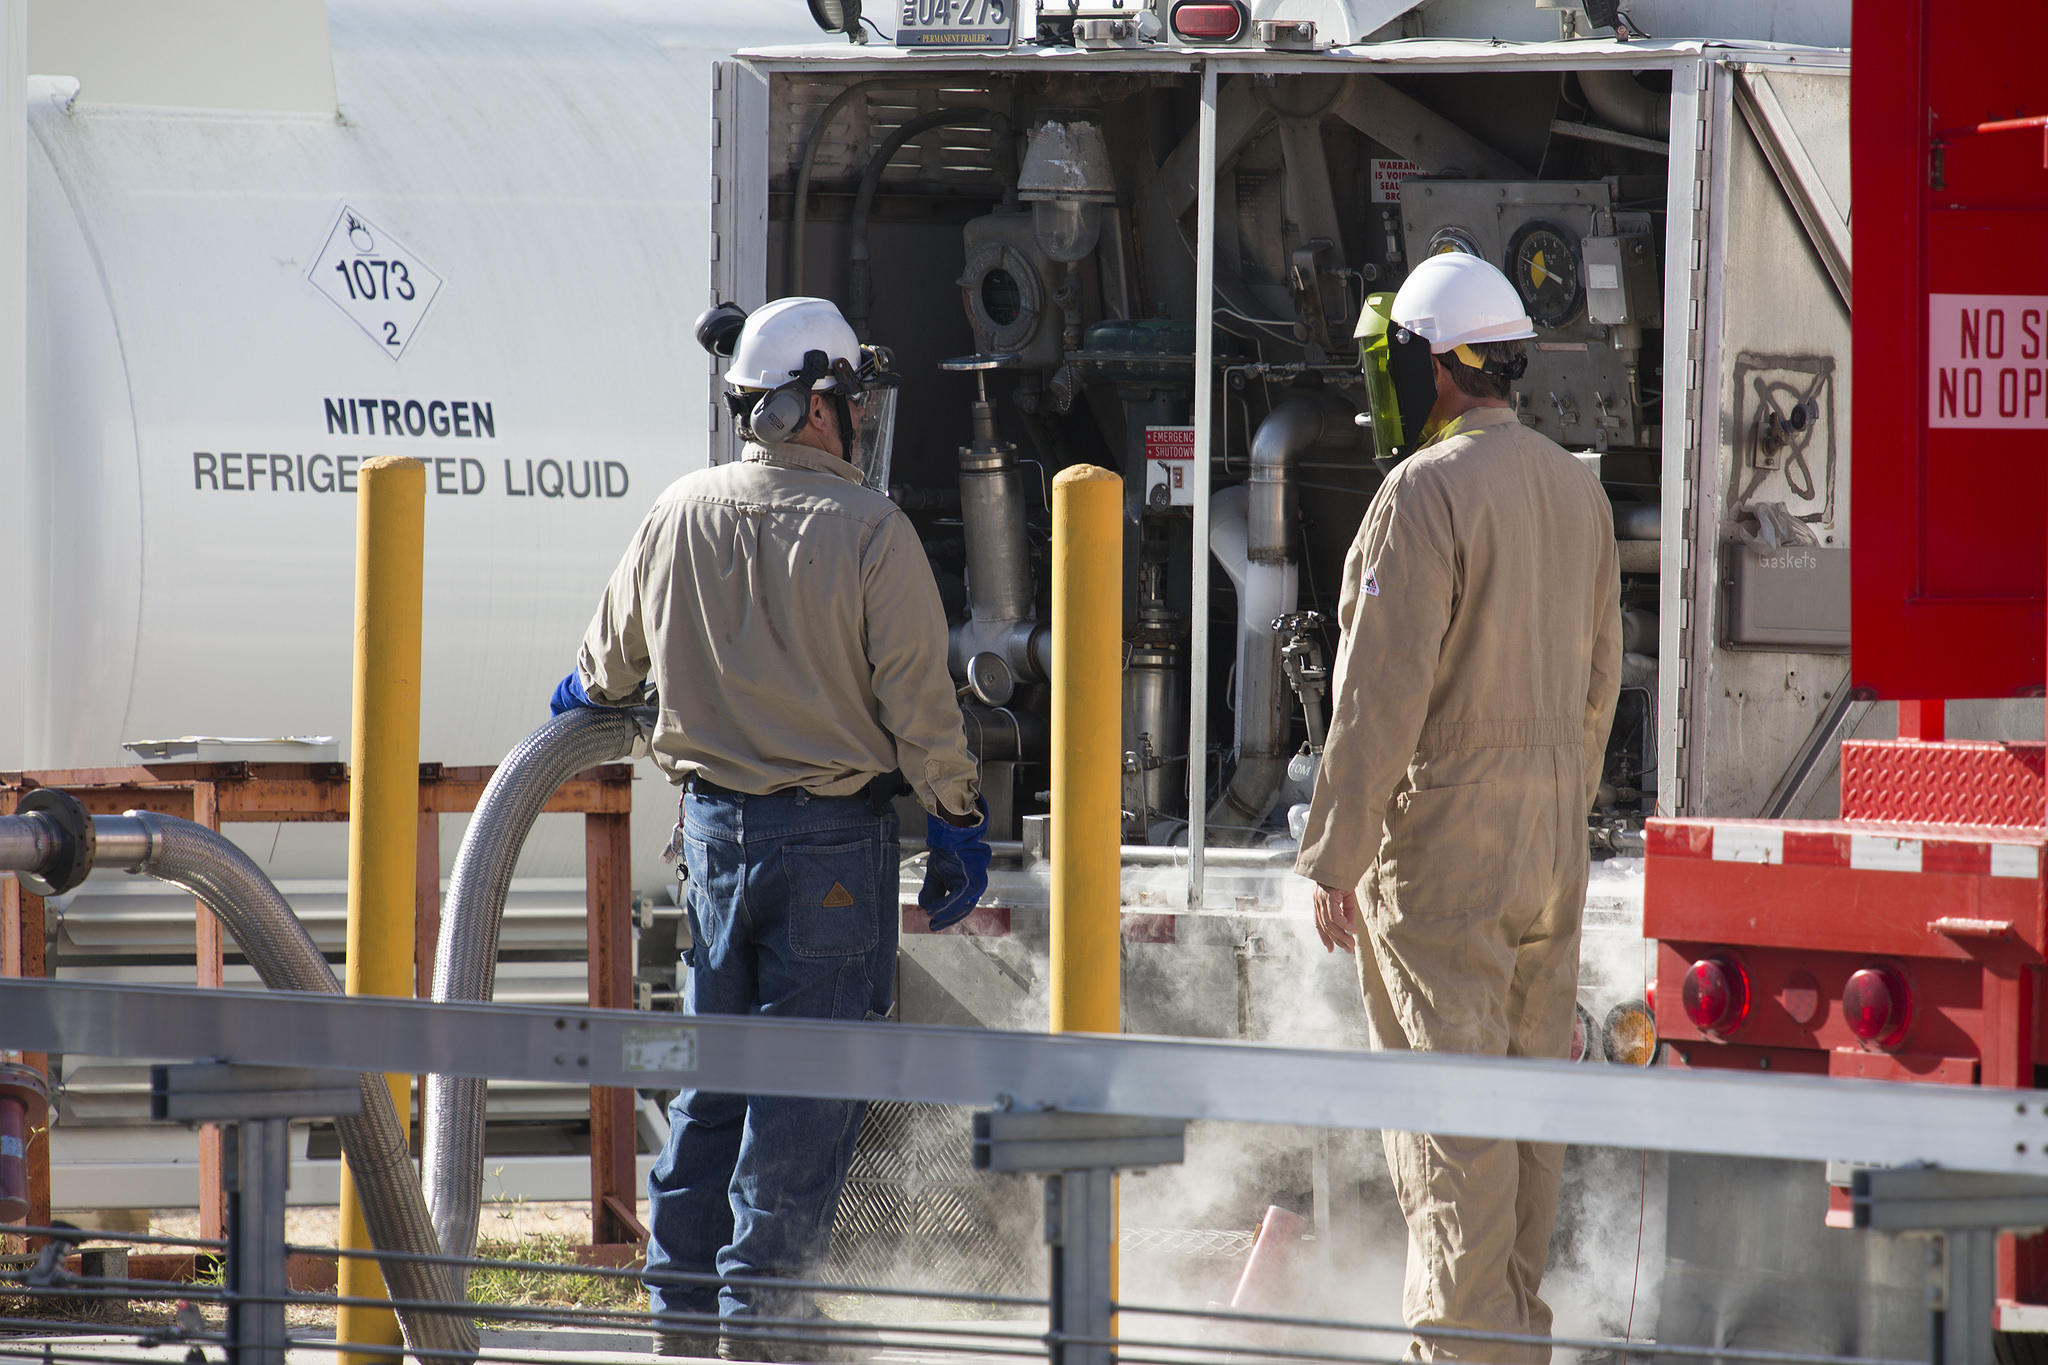 Praxair technicians pressurize the hydrogen trailer during a test.